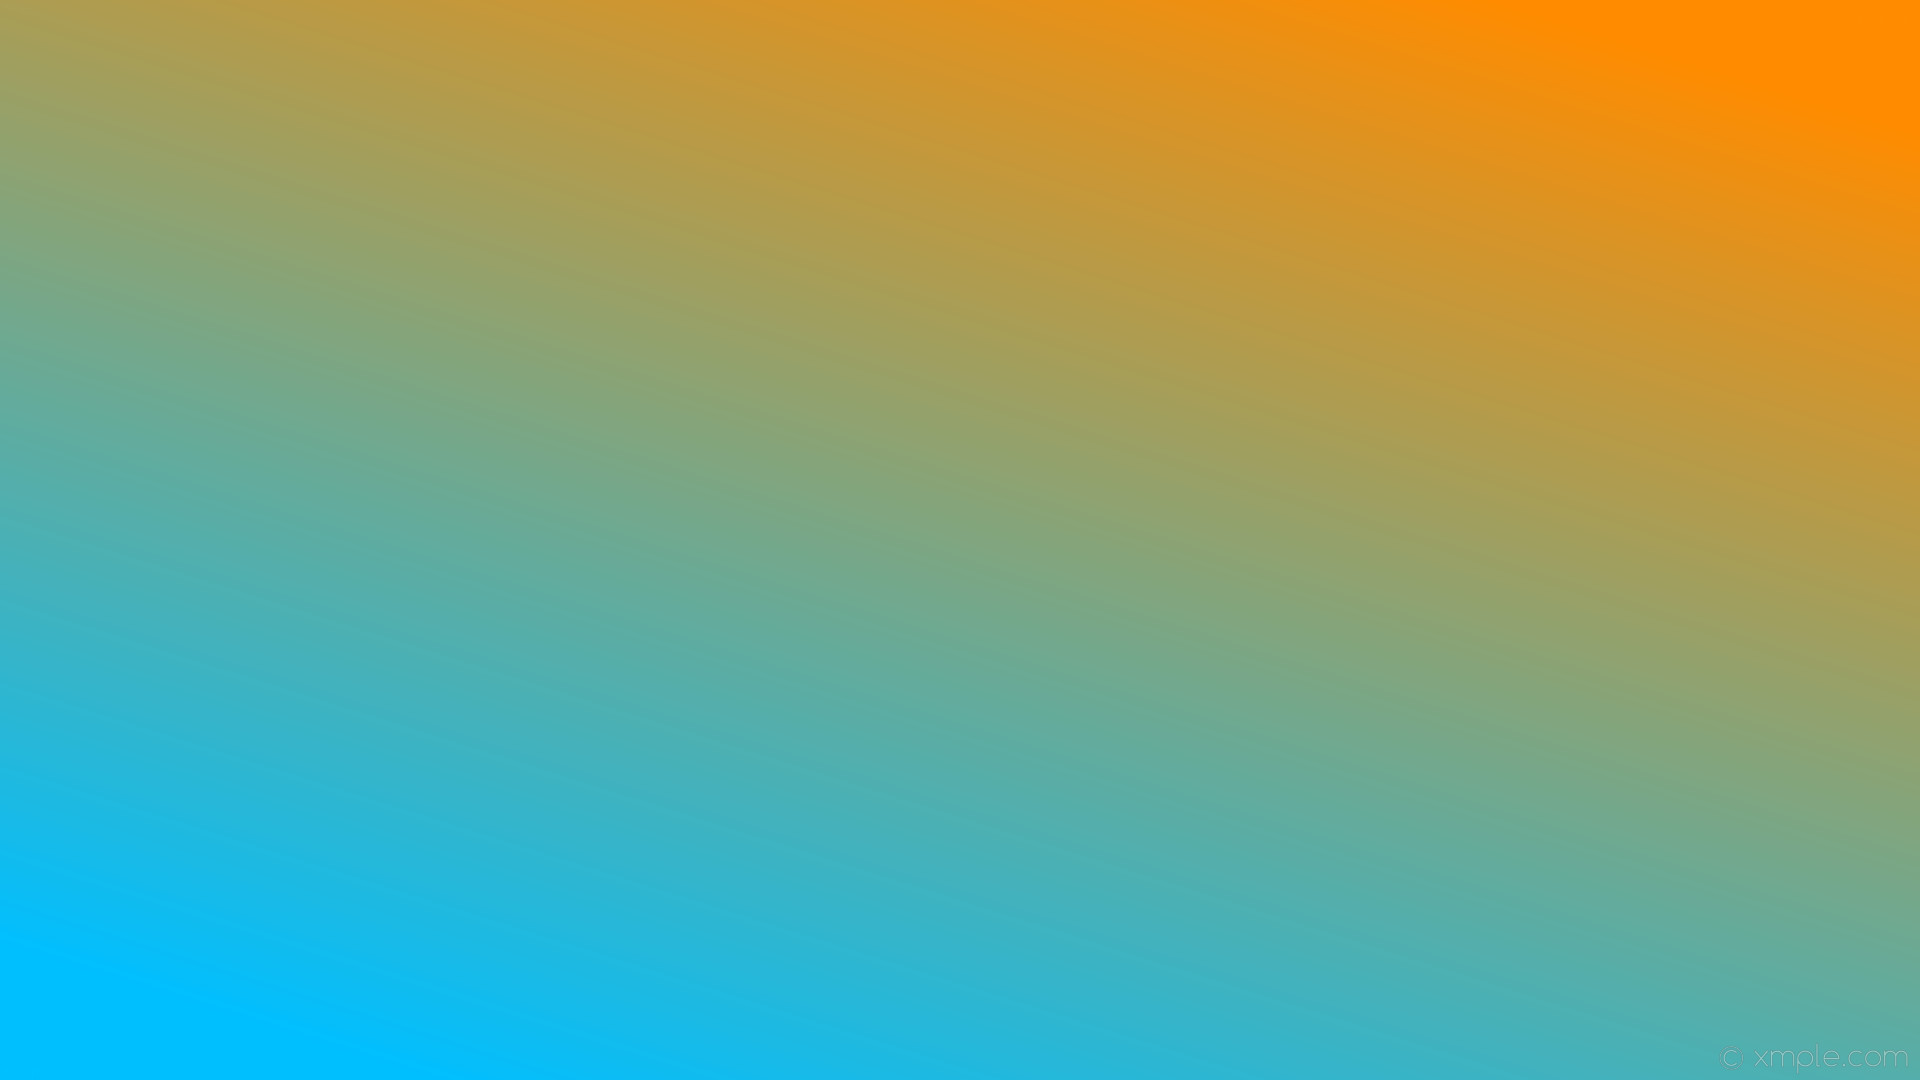 1920x1080 wallpaper linear orange gradient blue dark orange deep sky blue #ff8c00  #00bfff 45Â°